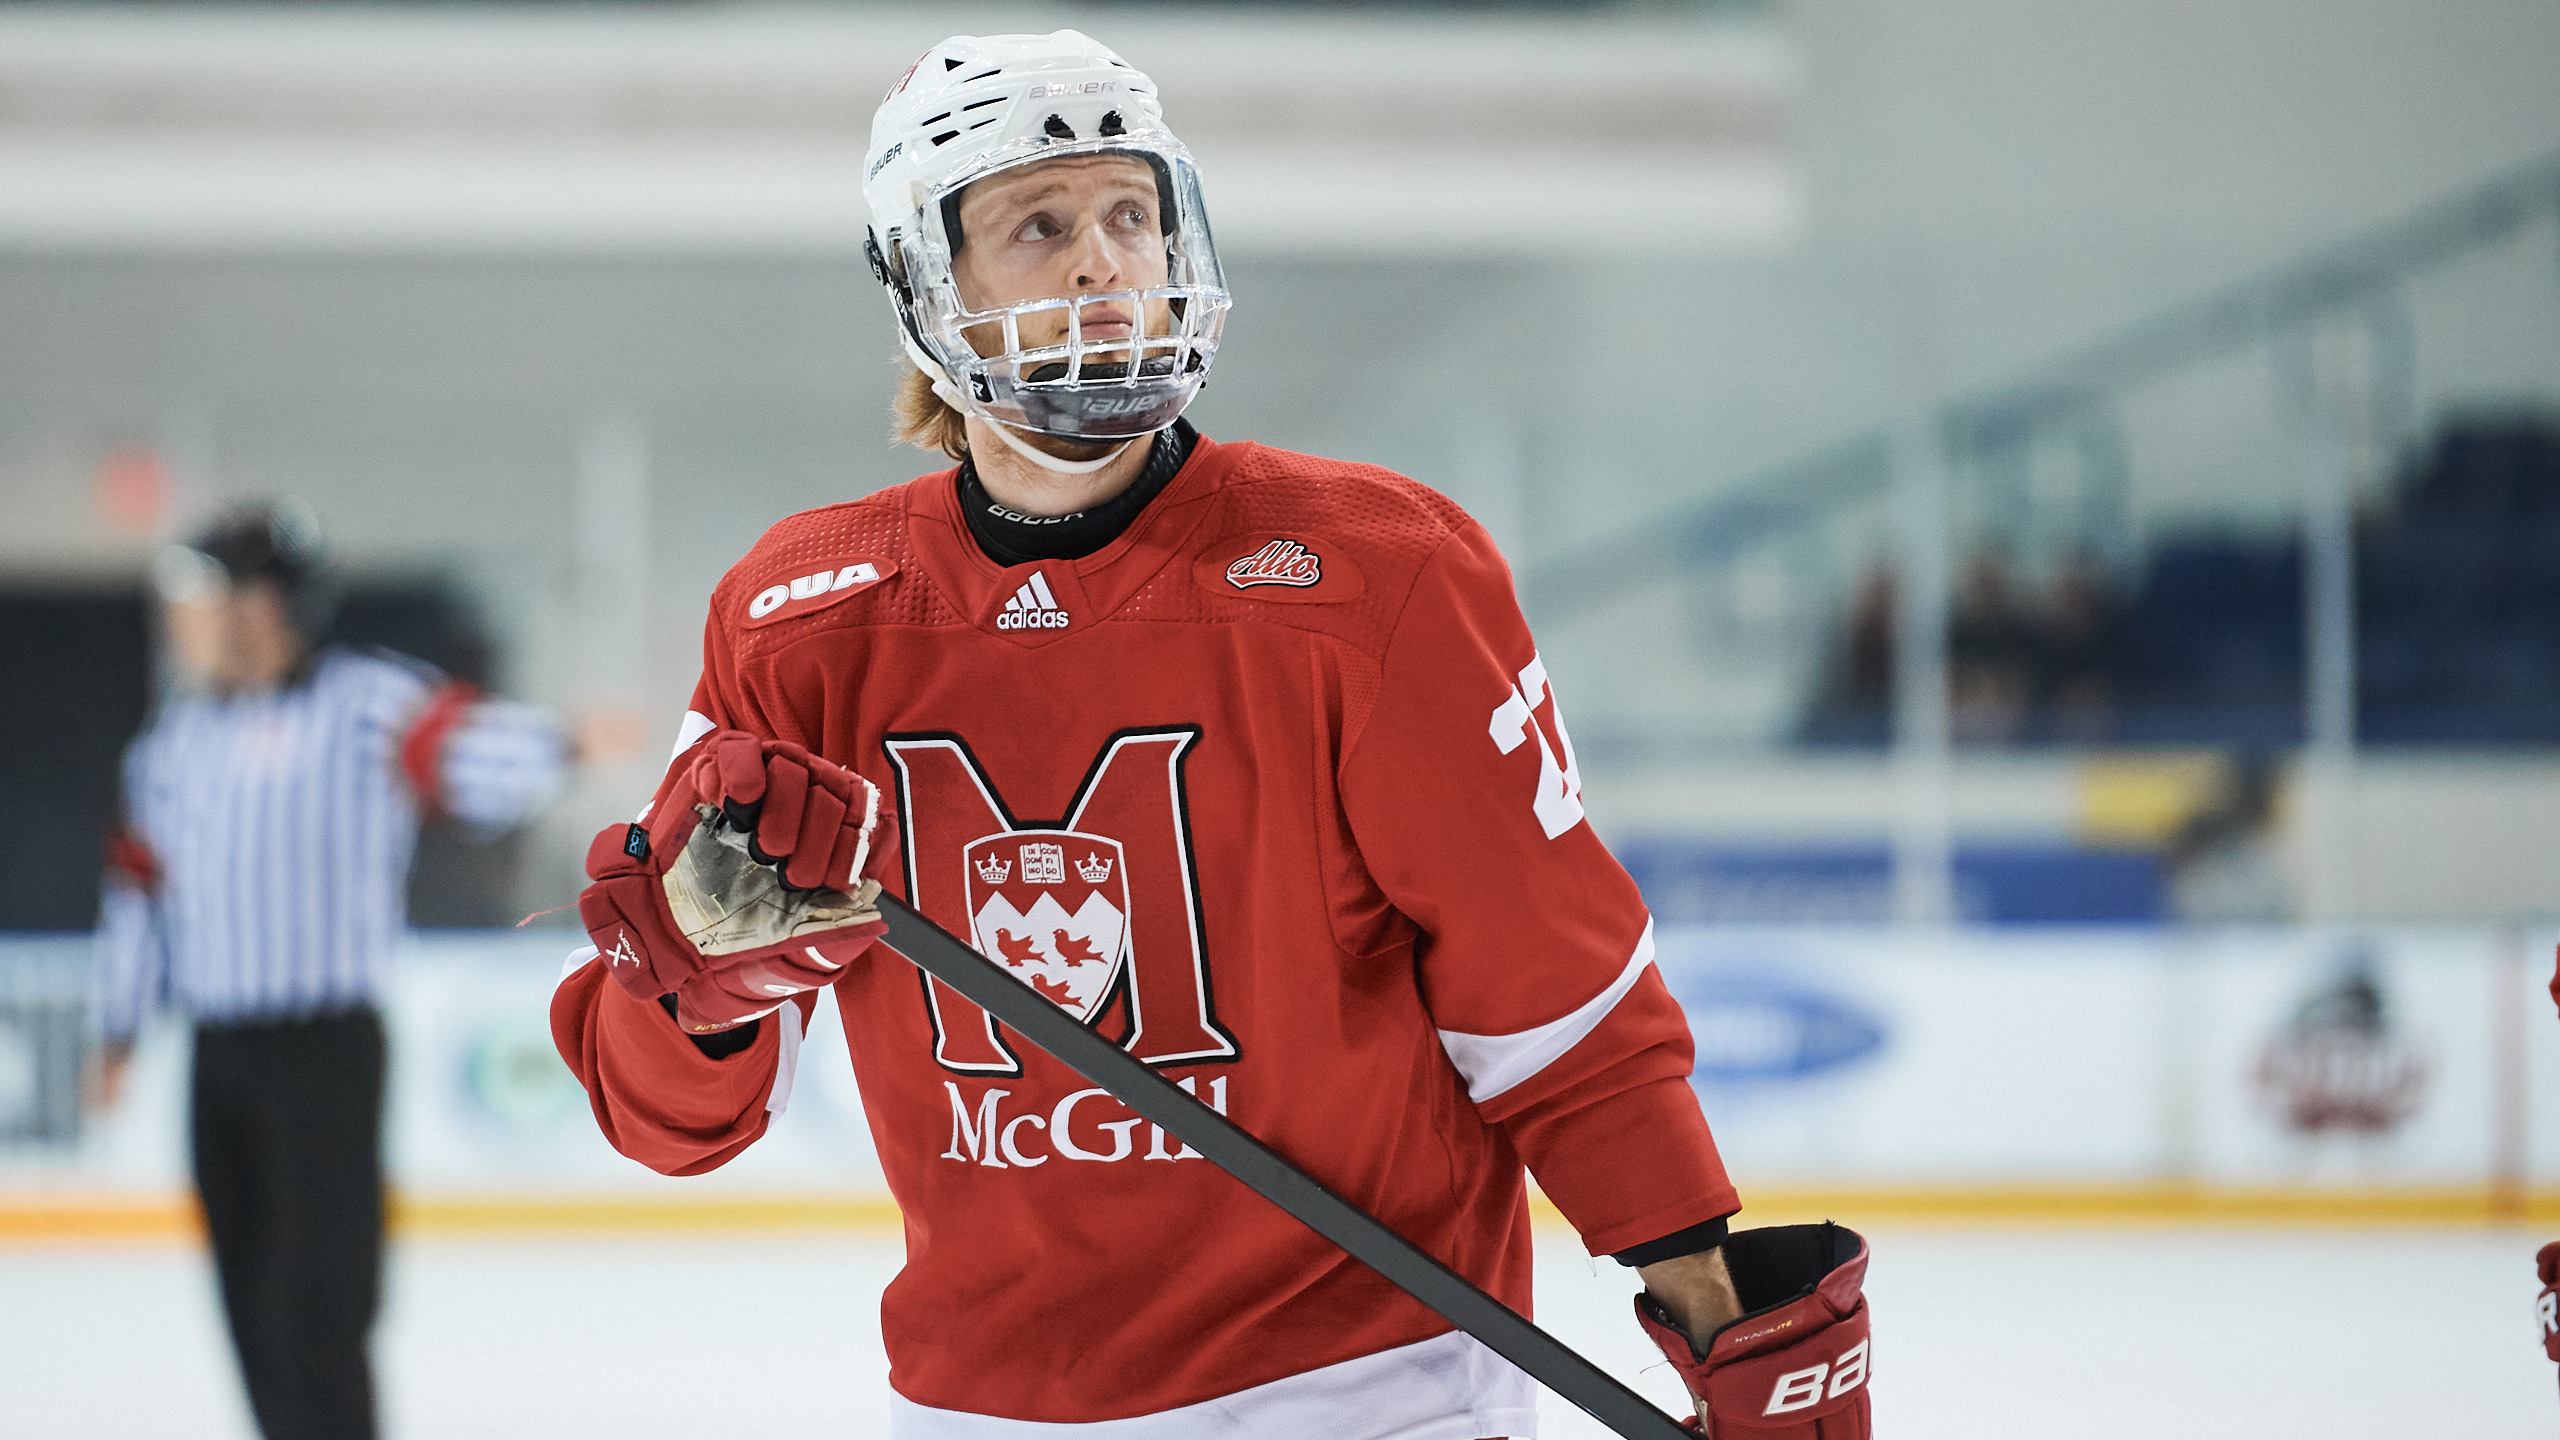 A McGill University hockey player